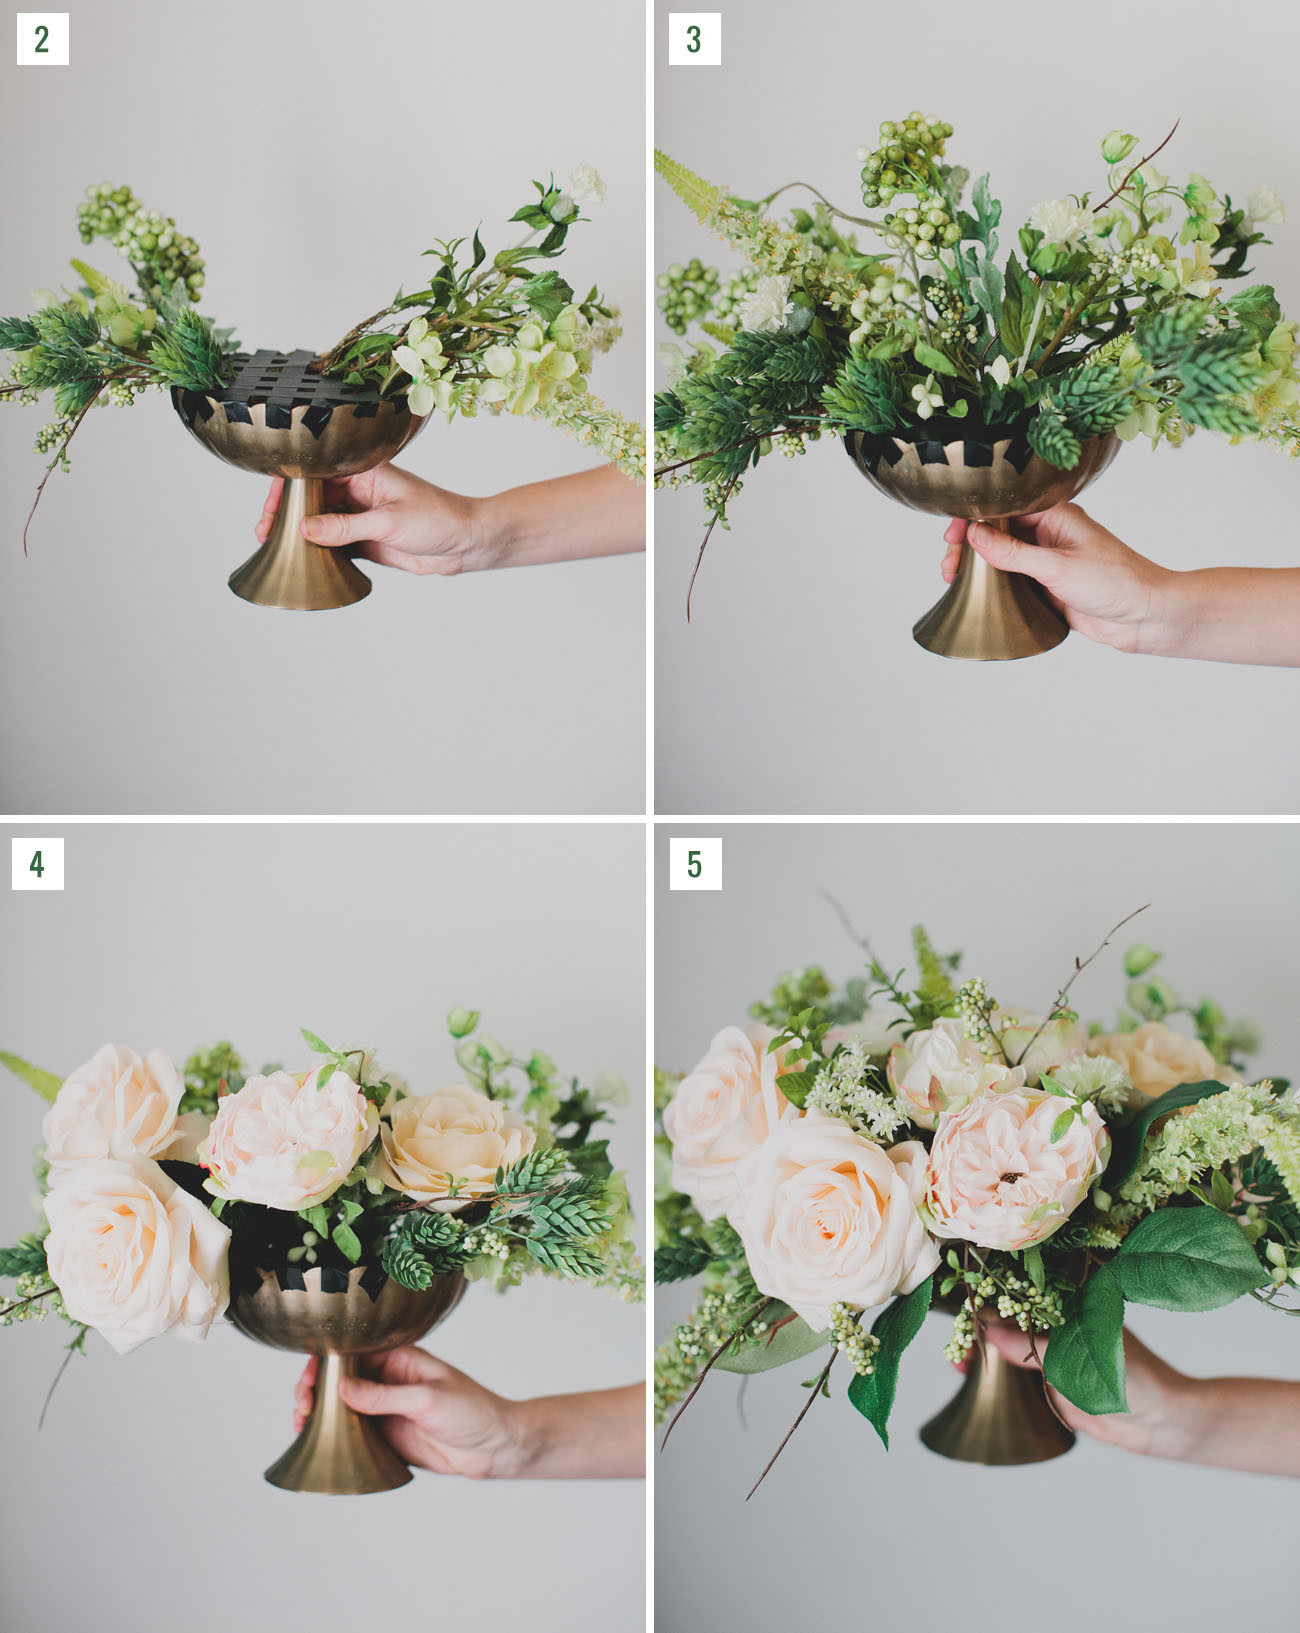 Best ideas about DIY Flower Centerpieces
. Save or Pin DIY Silk Flower Centerpiece Now.